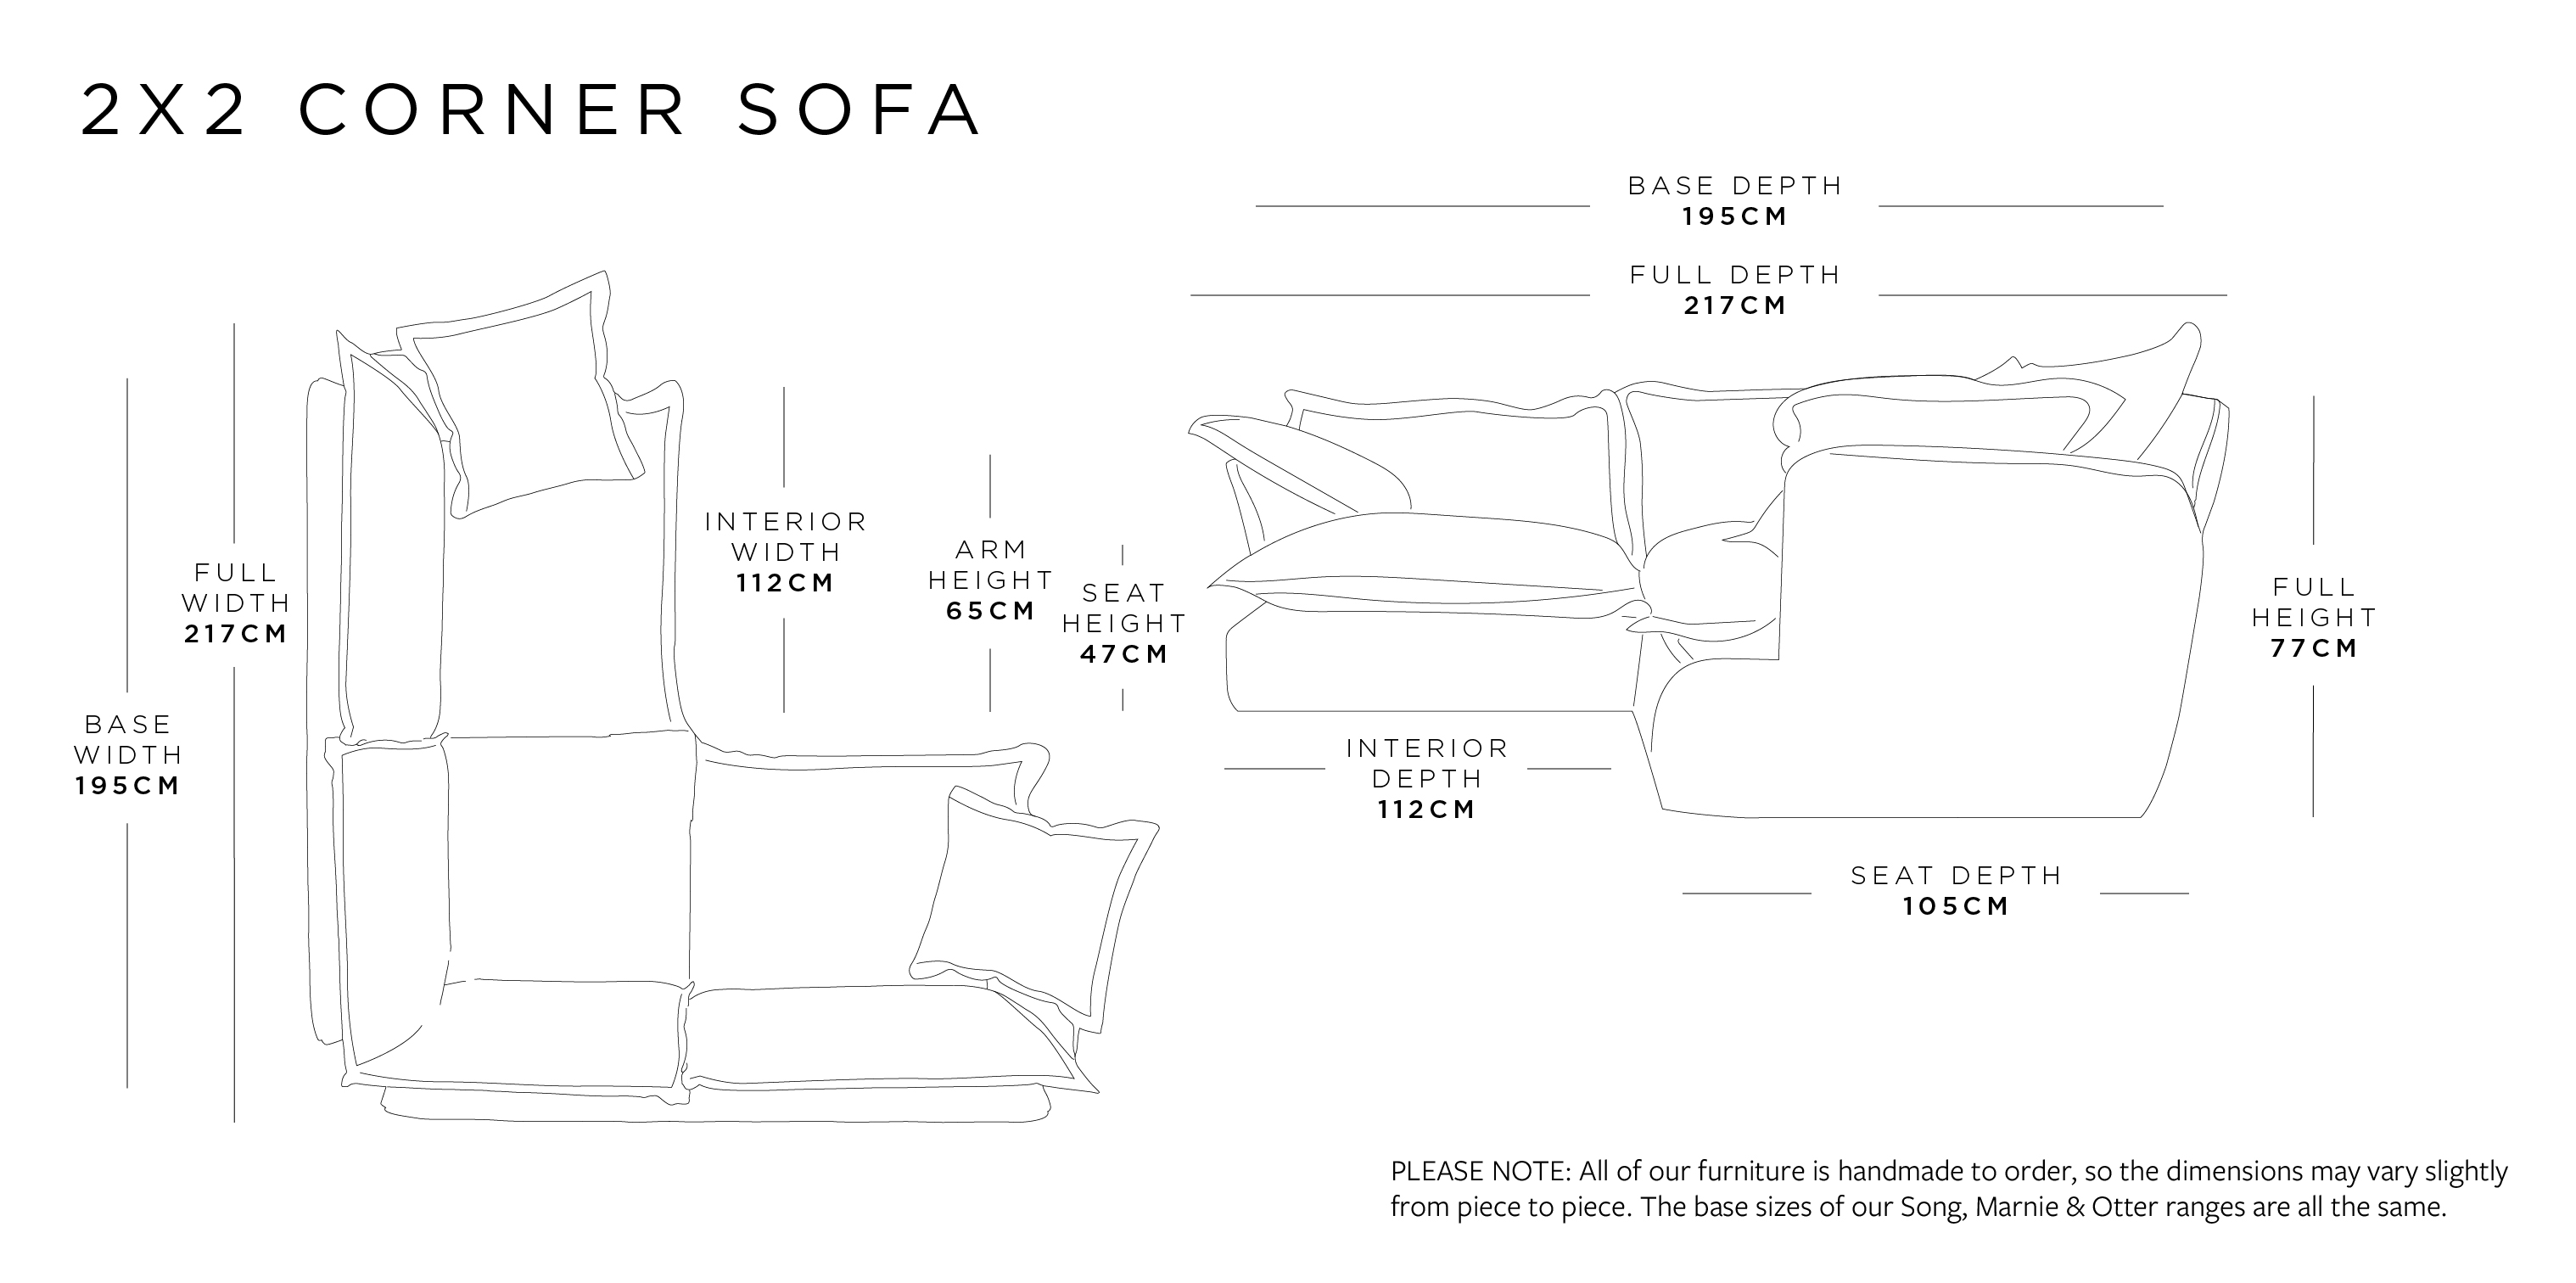 2x2 Corner Sofa | Song Range Size Guide